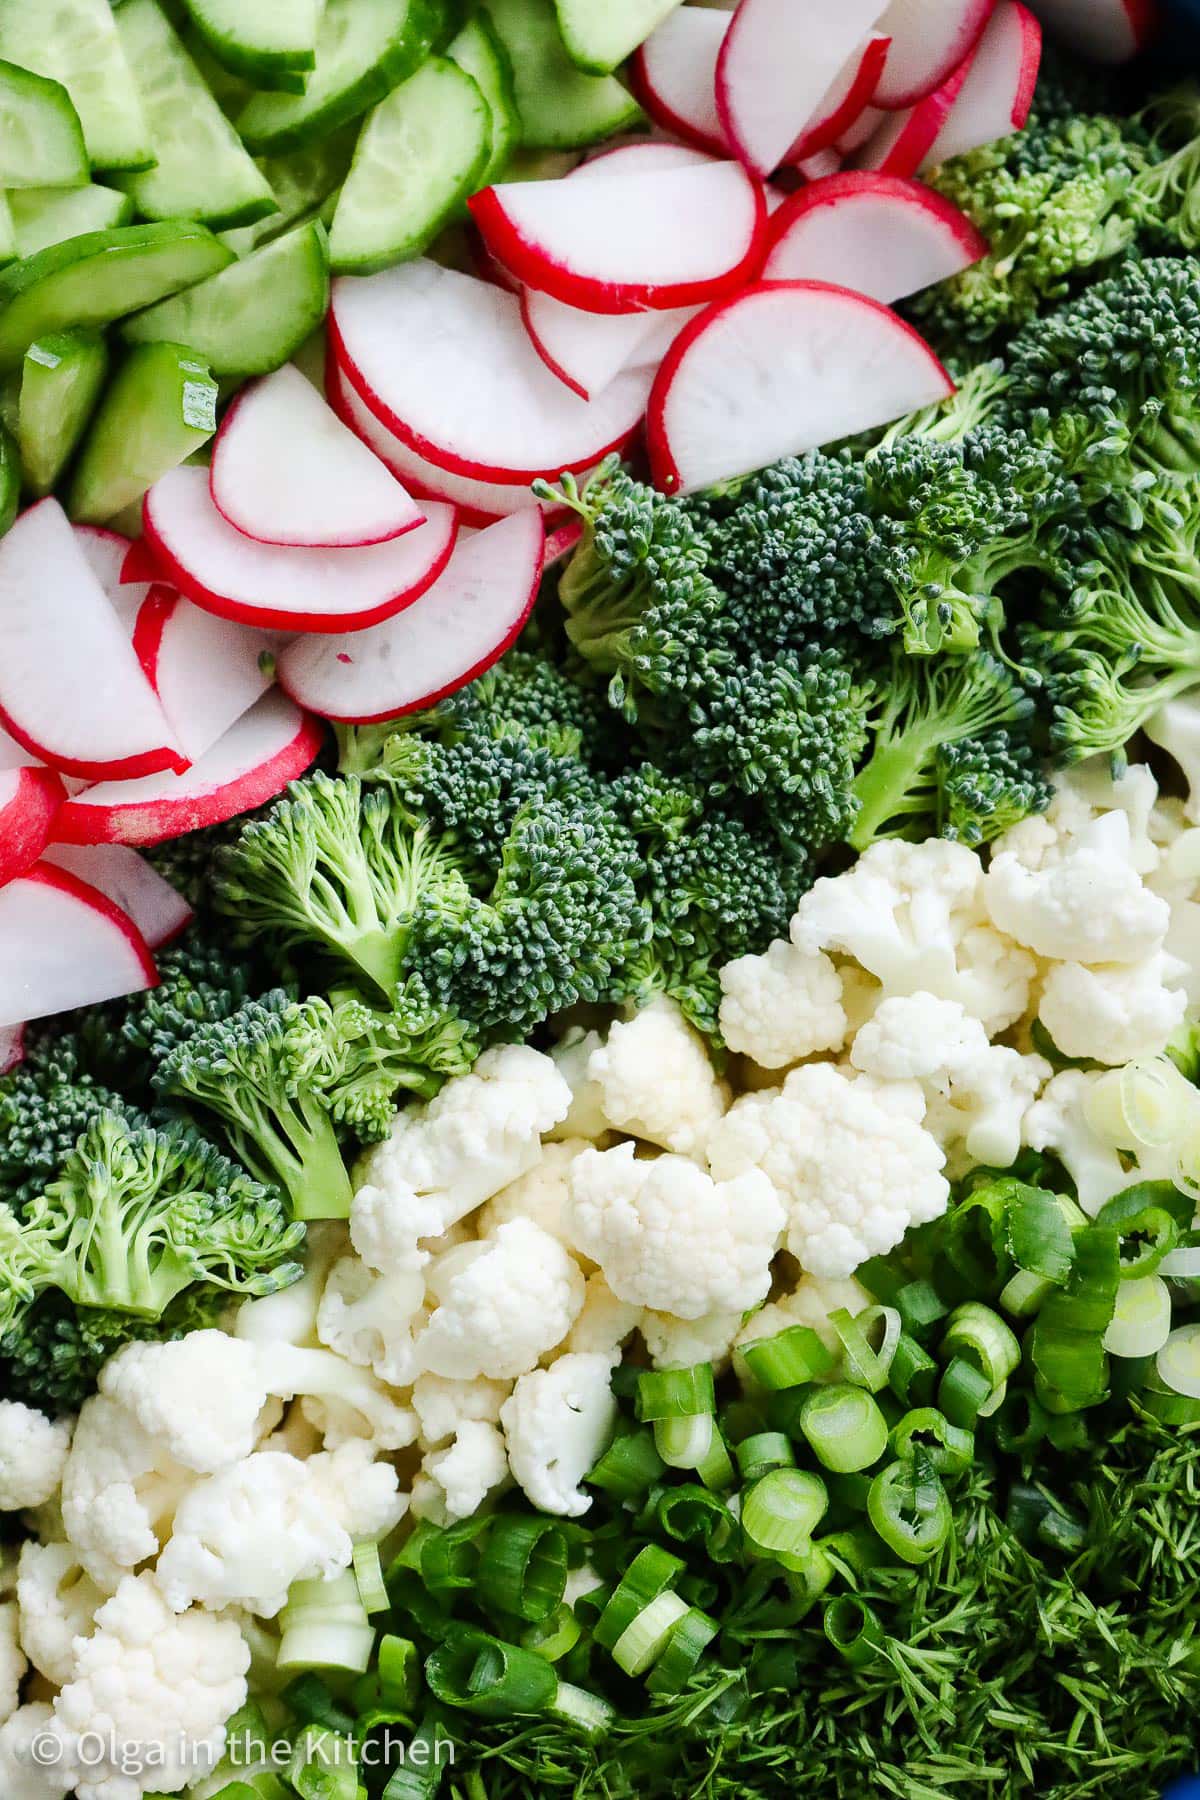 How to cut Broccoli Cauliflower Salad